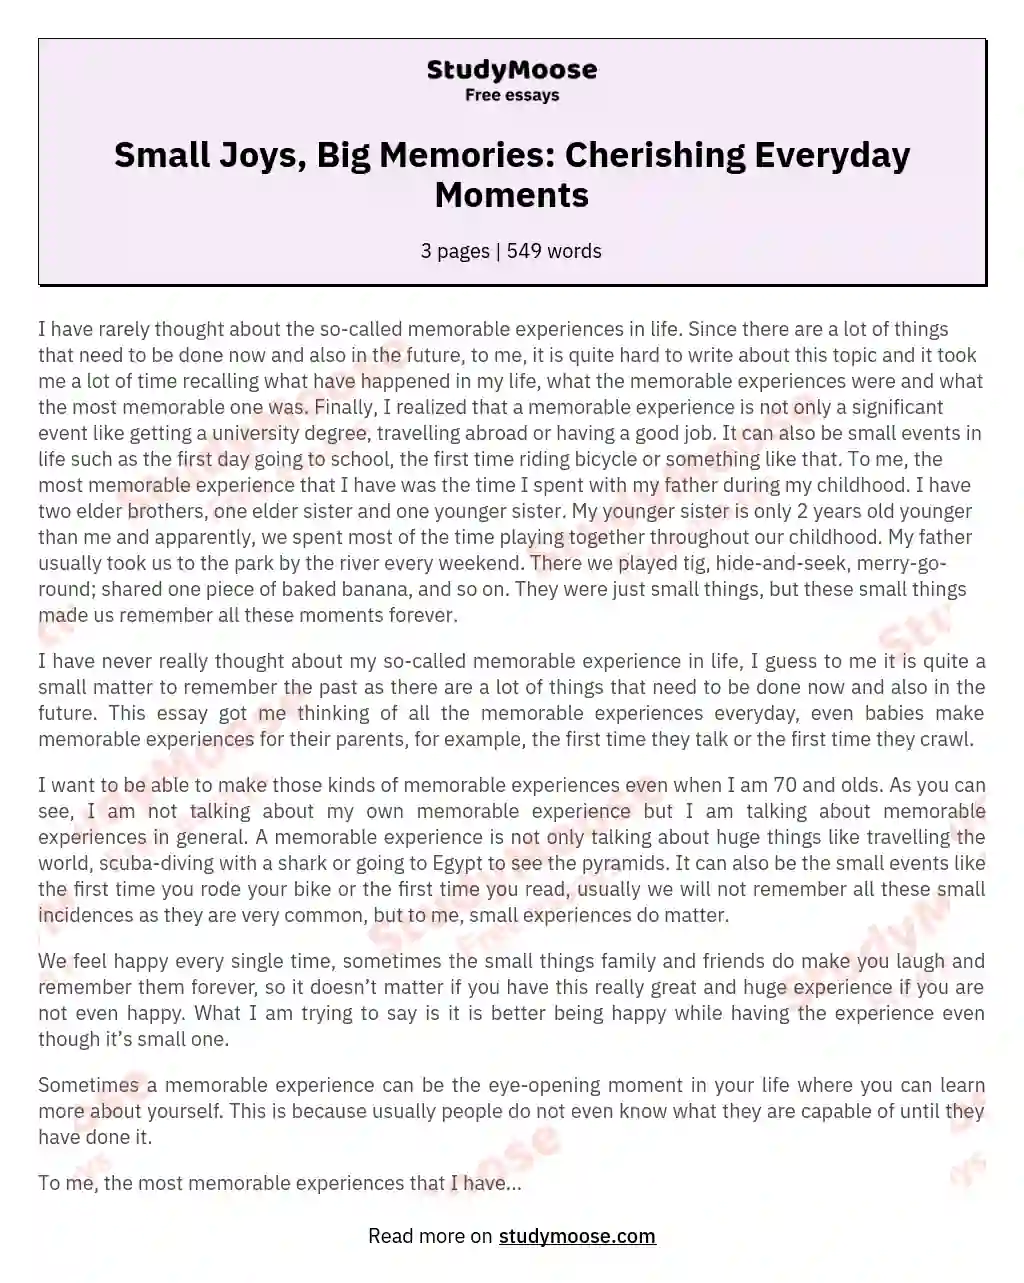 Small Joys, Big Memories: Cherishing Everyday Moments essay